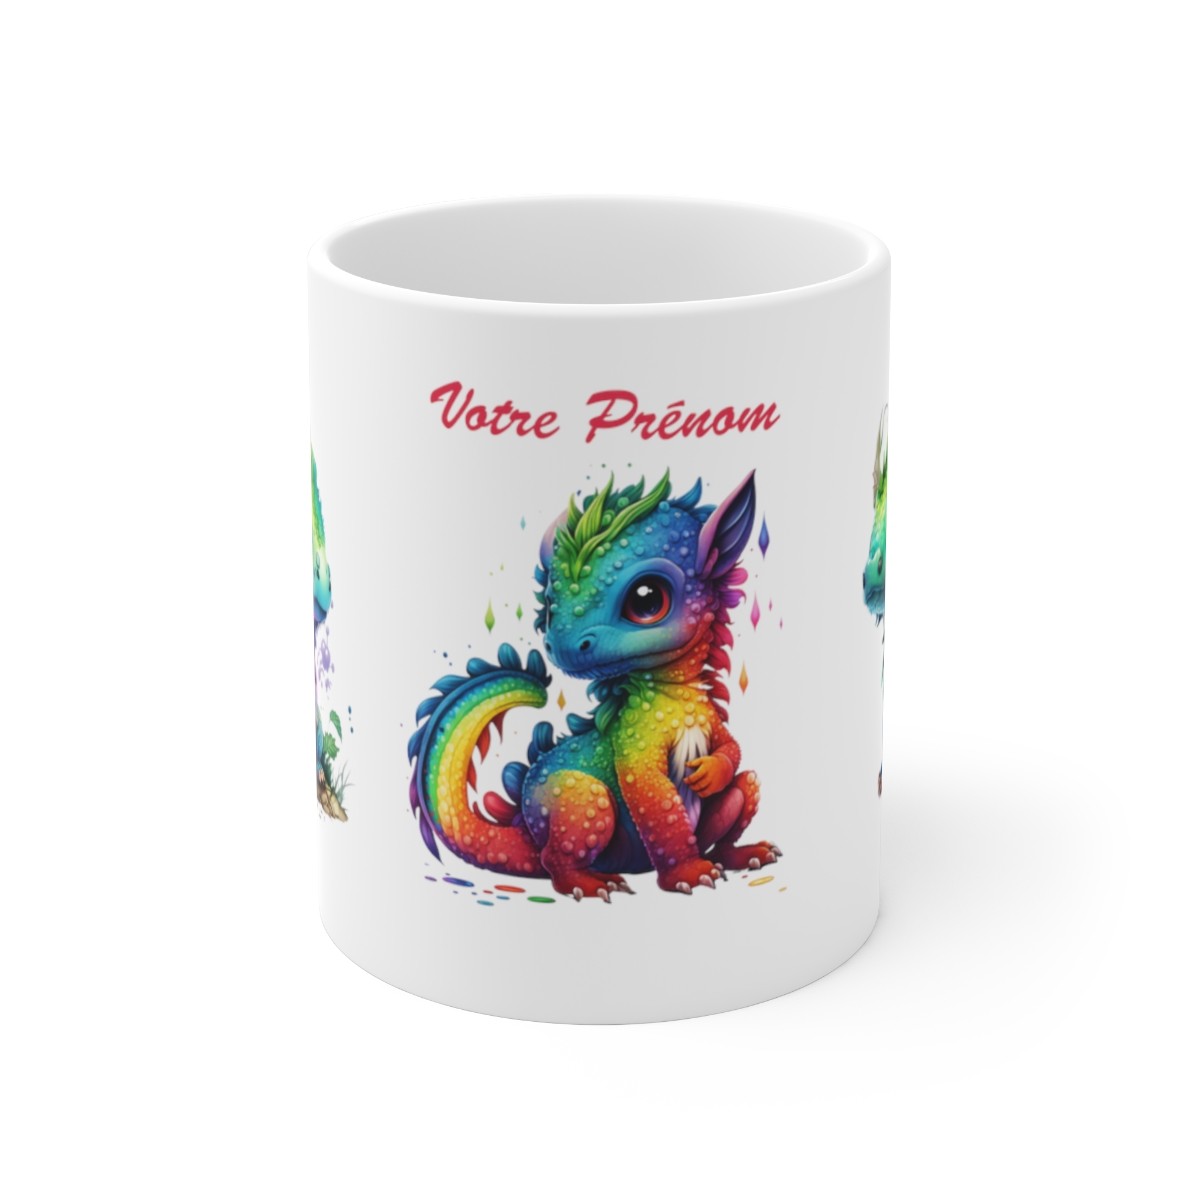 https://stickers-muraux-enfant.fr/13382/mug-personnalise-dragons-avec-prenom-idee-cadeau-mug-tasse-pour-enfant-et-adulte.jpg